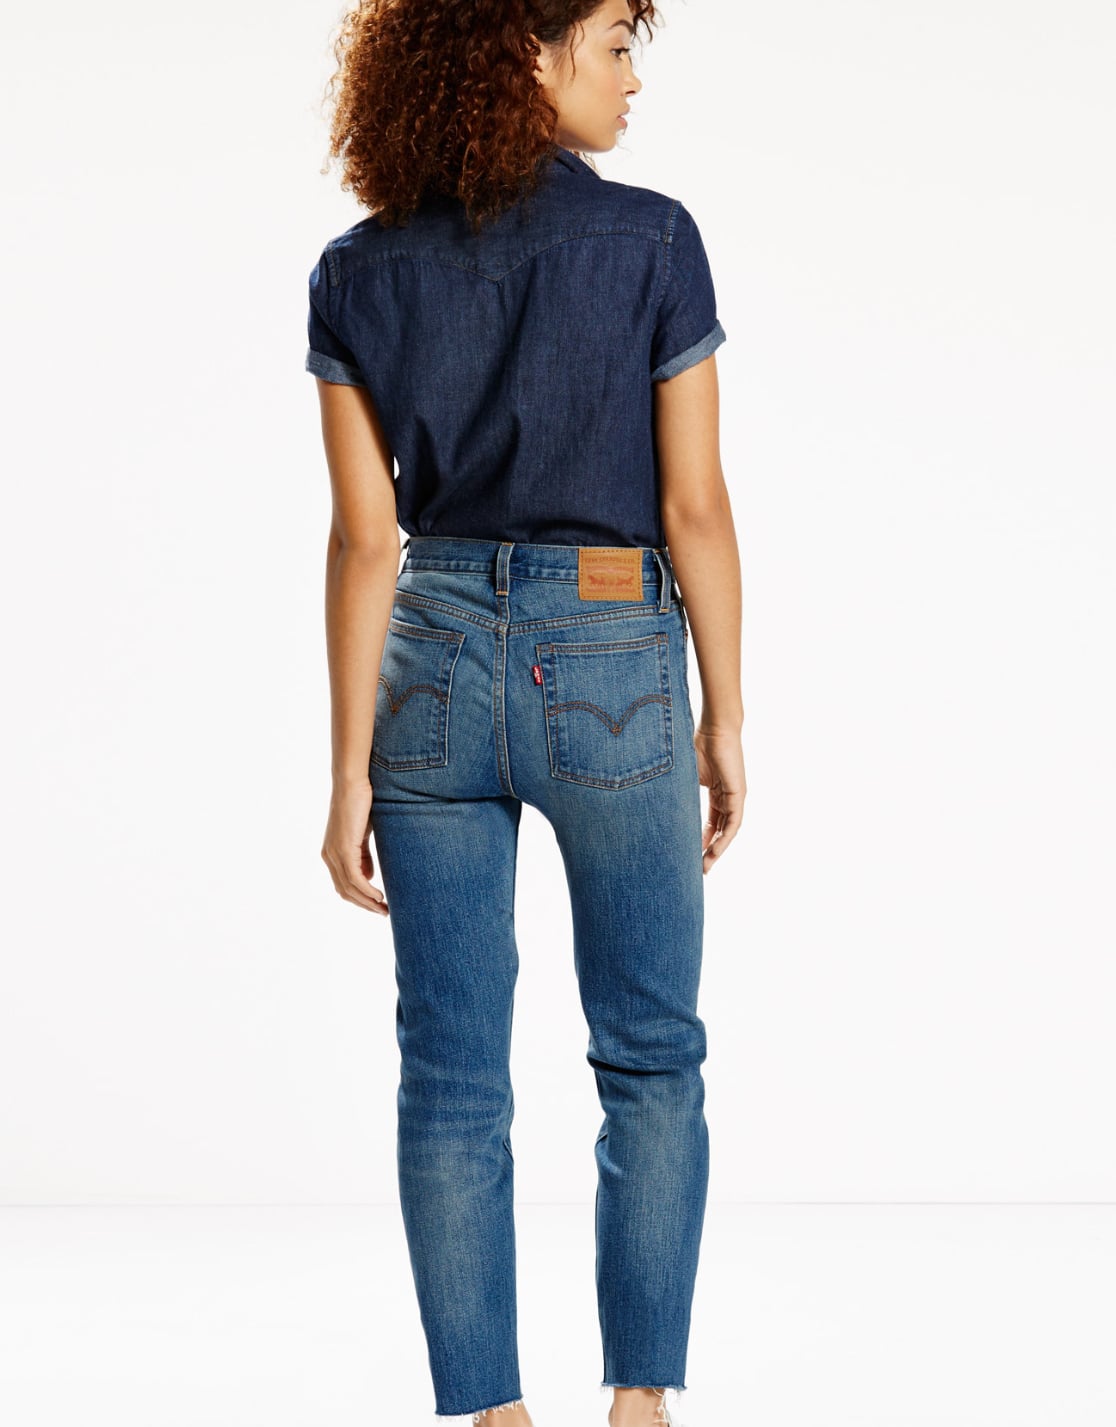 Levi's Wedgie Jeans | POPSUGAR Fashion